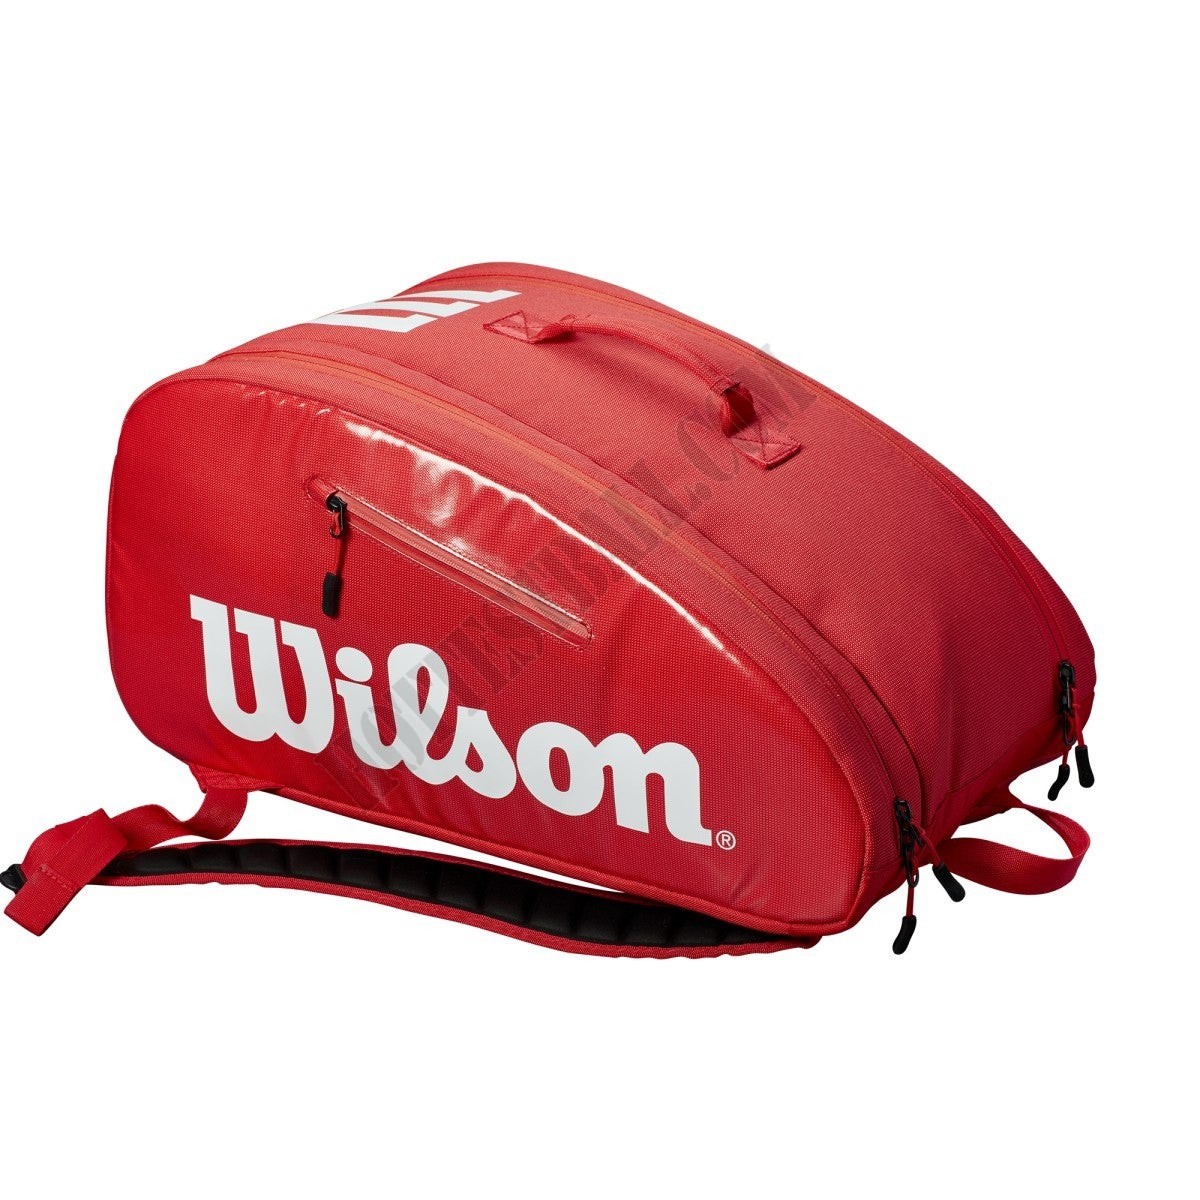 Super Tour Paddlepak - Wilson Discount Store - -1